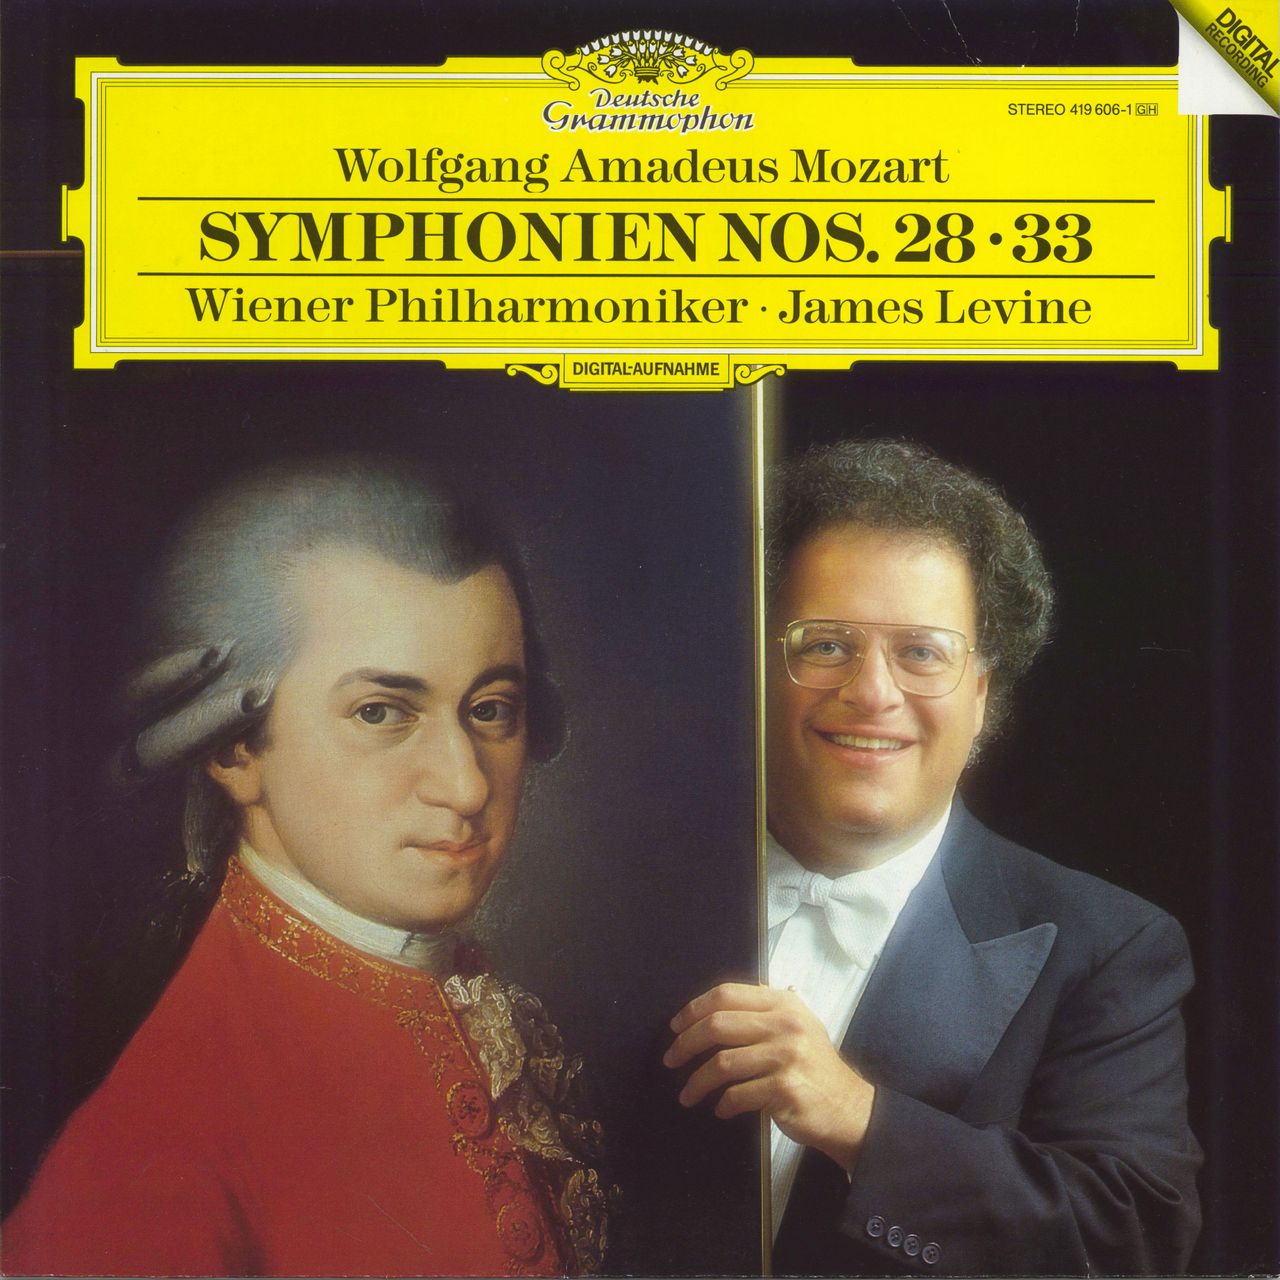 Wolfgang Amadeus Mozart Symphonien Nos. 28 & 33 German vinyl LP album (LP record) 419606-1